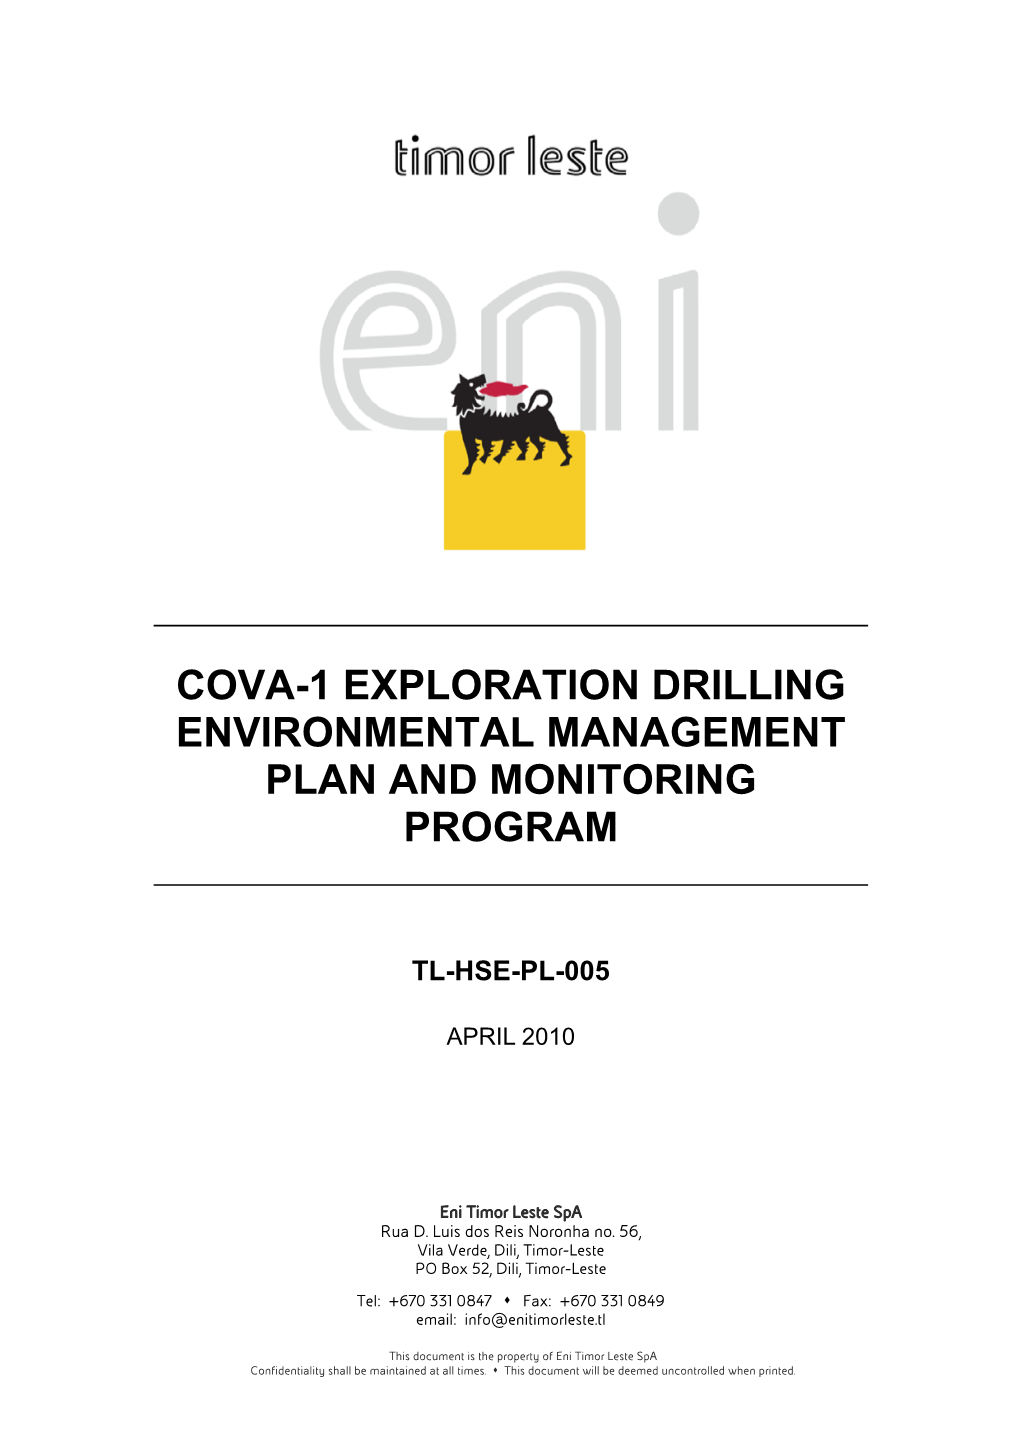 Cova-1 Exploration Drilling Environmental Management Plan and Monitoring Program